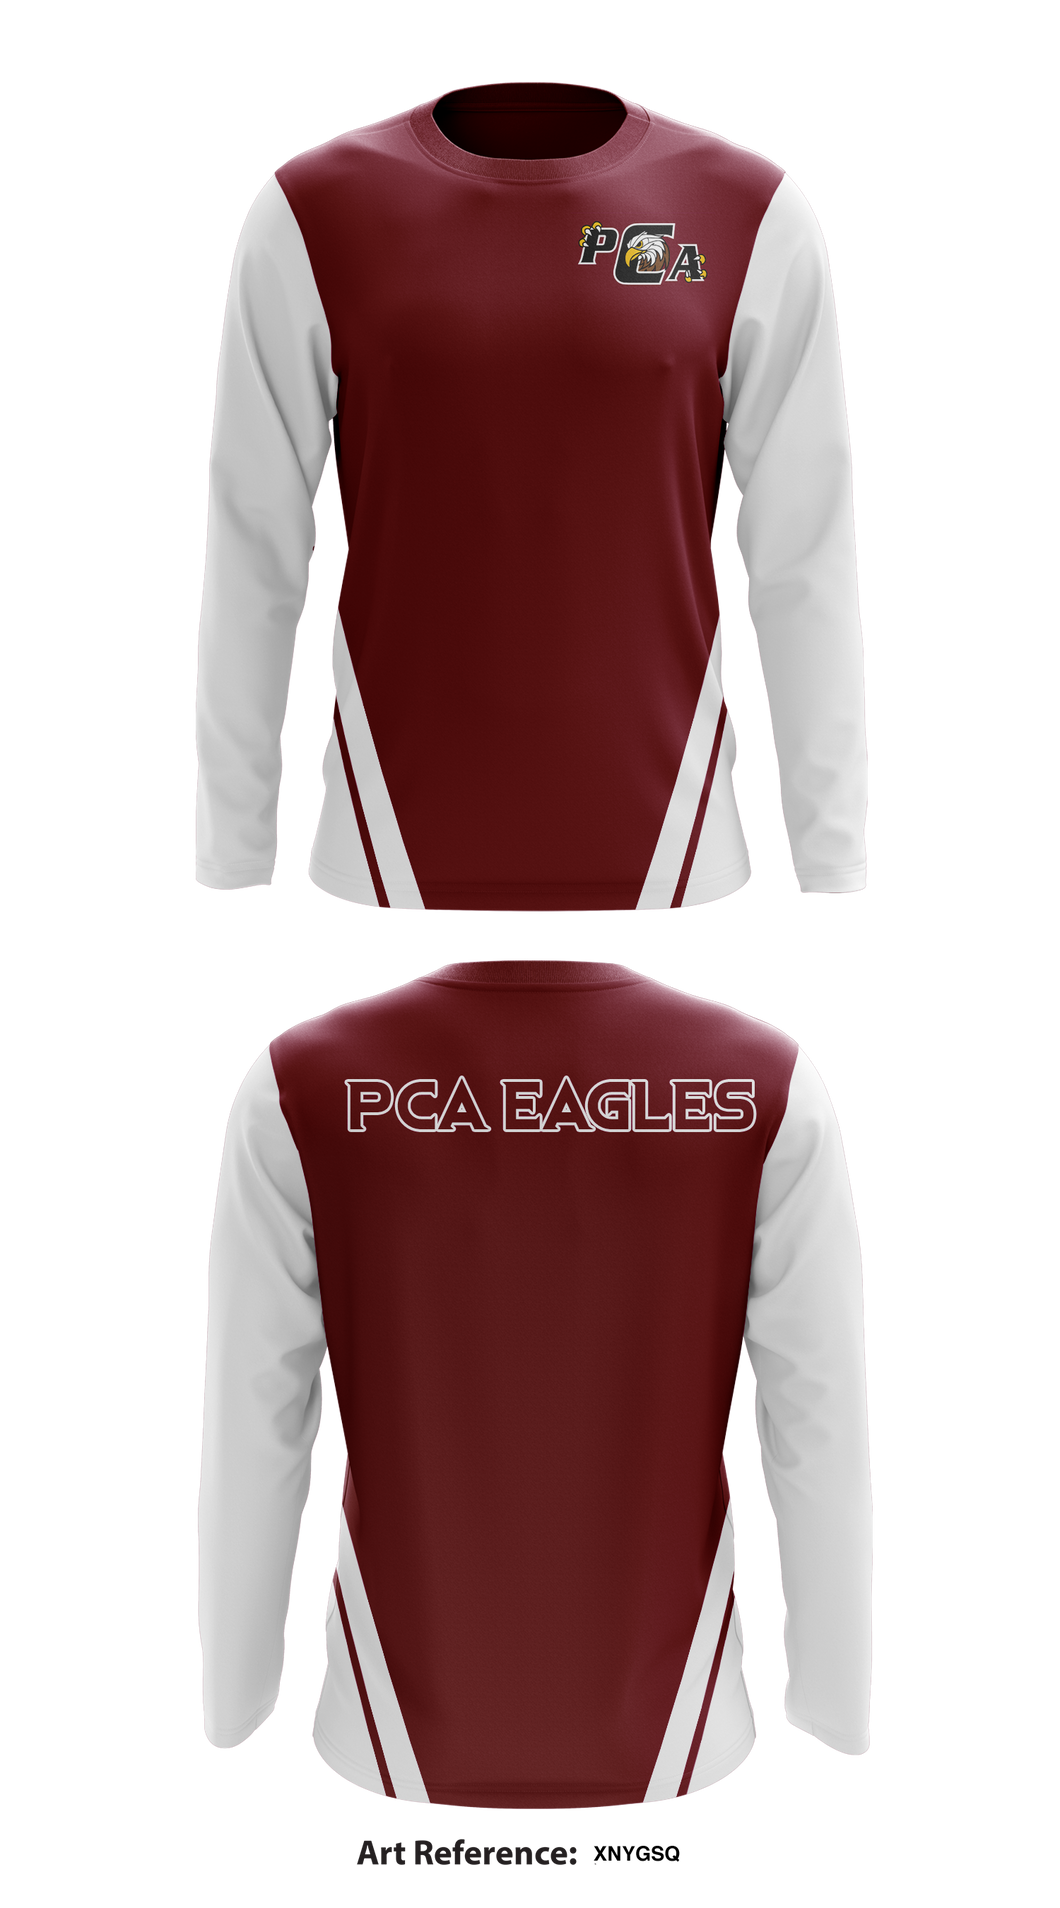 PCA Eagles 78652491 Long Sleeve Performance Shirt - 1